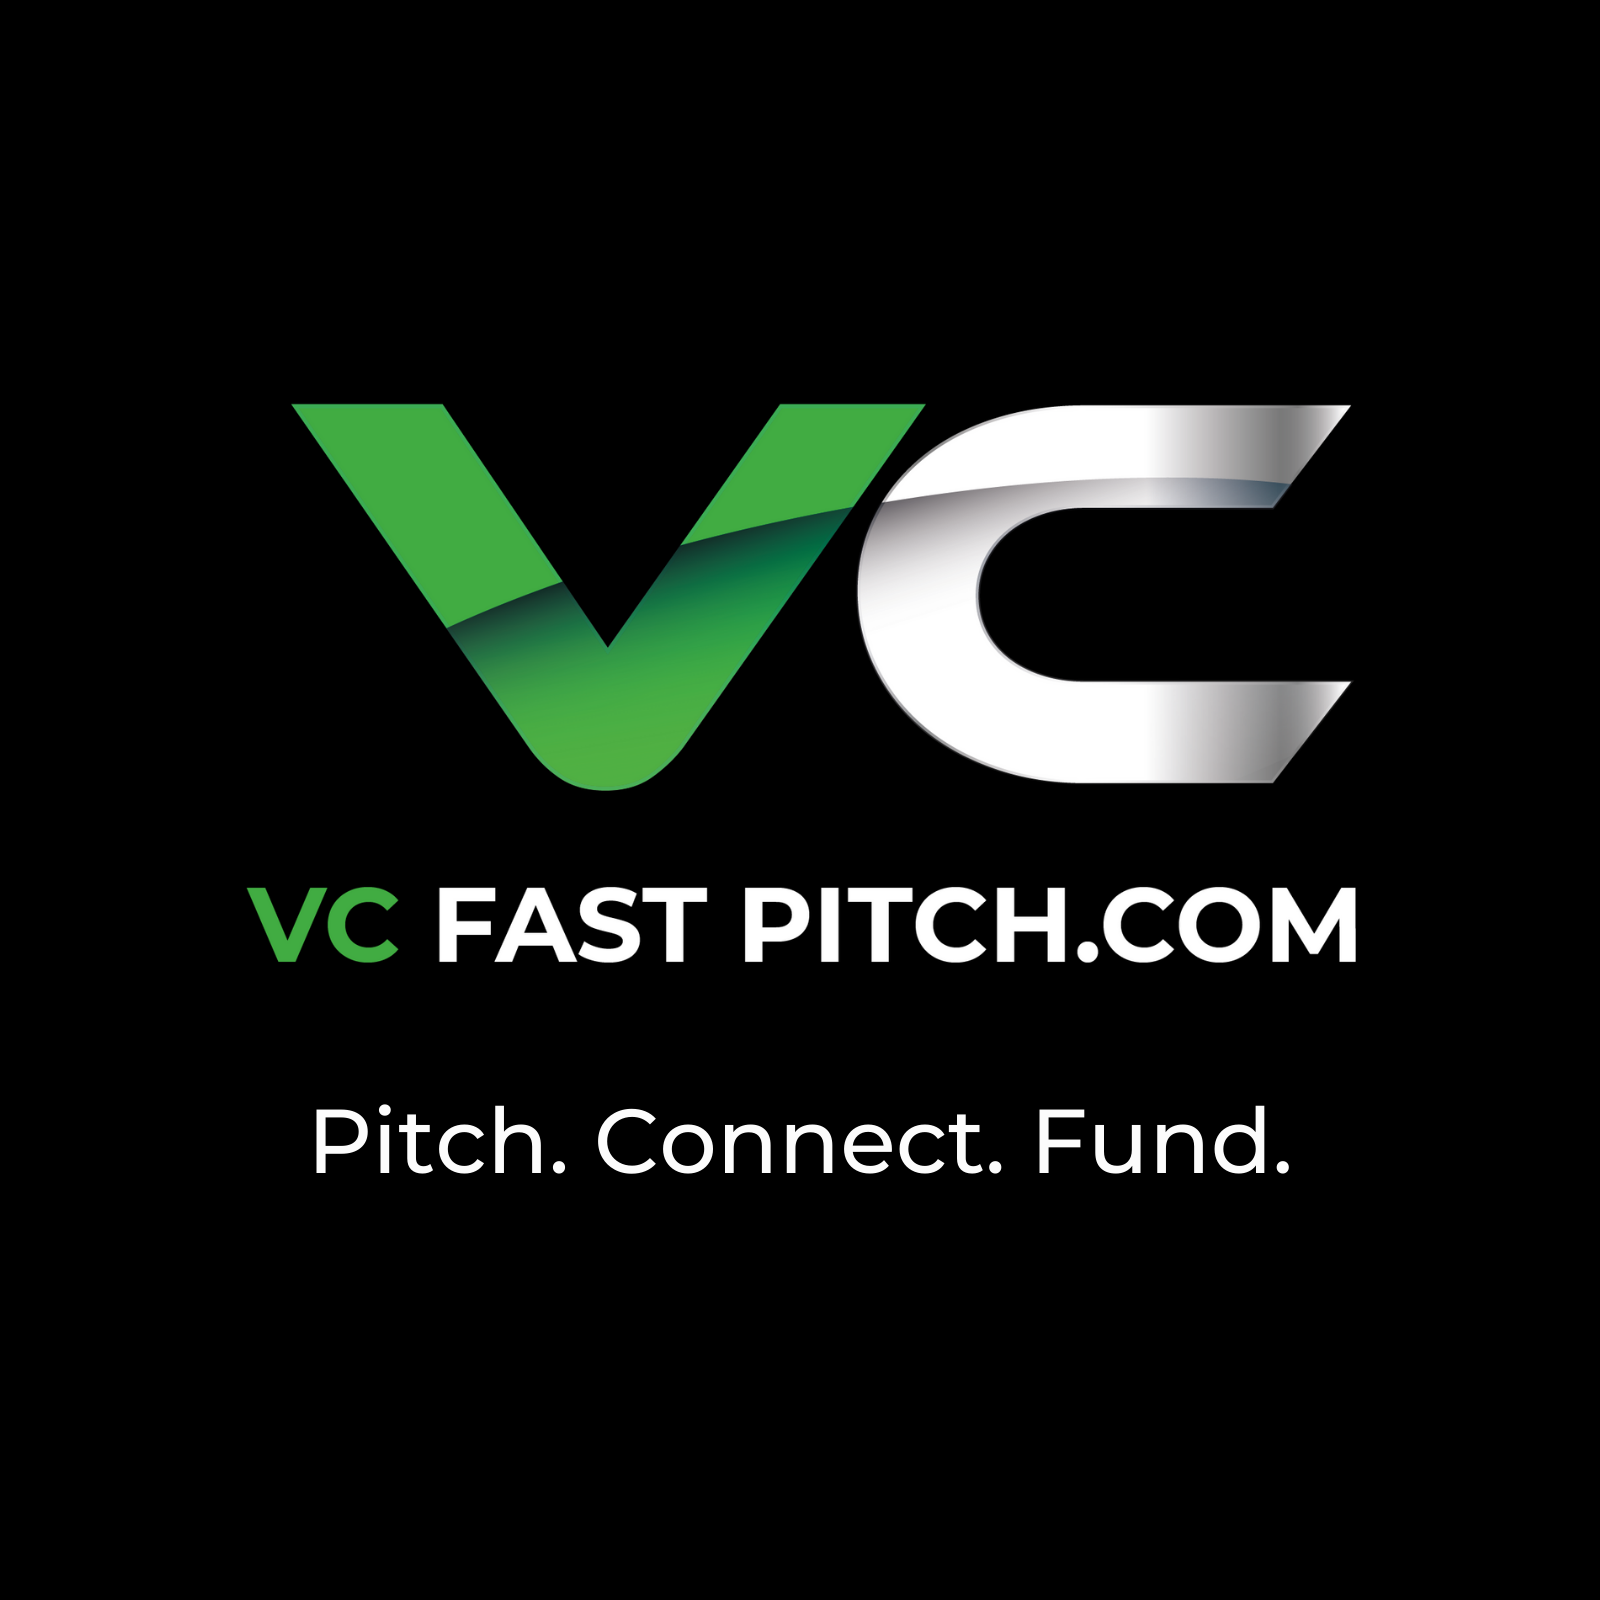 VCFastPitch.com